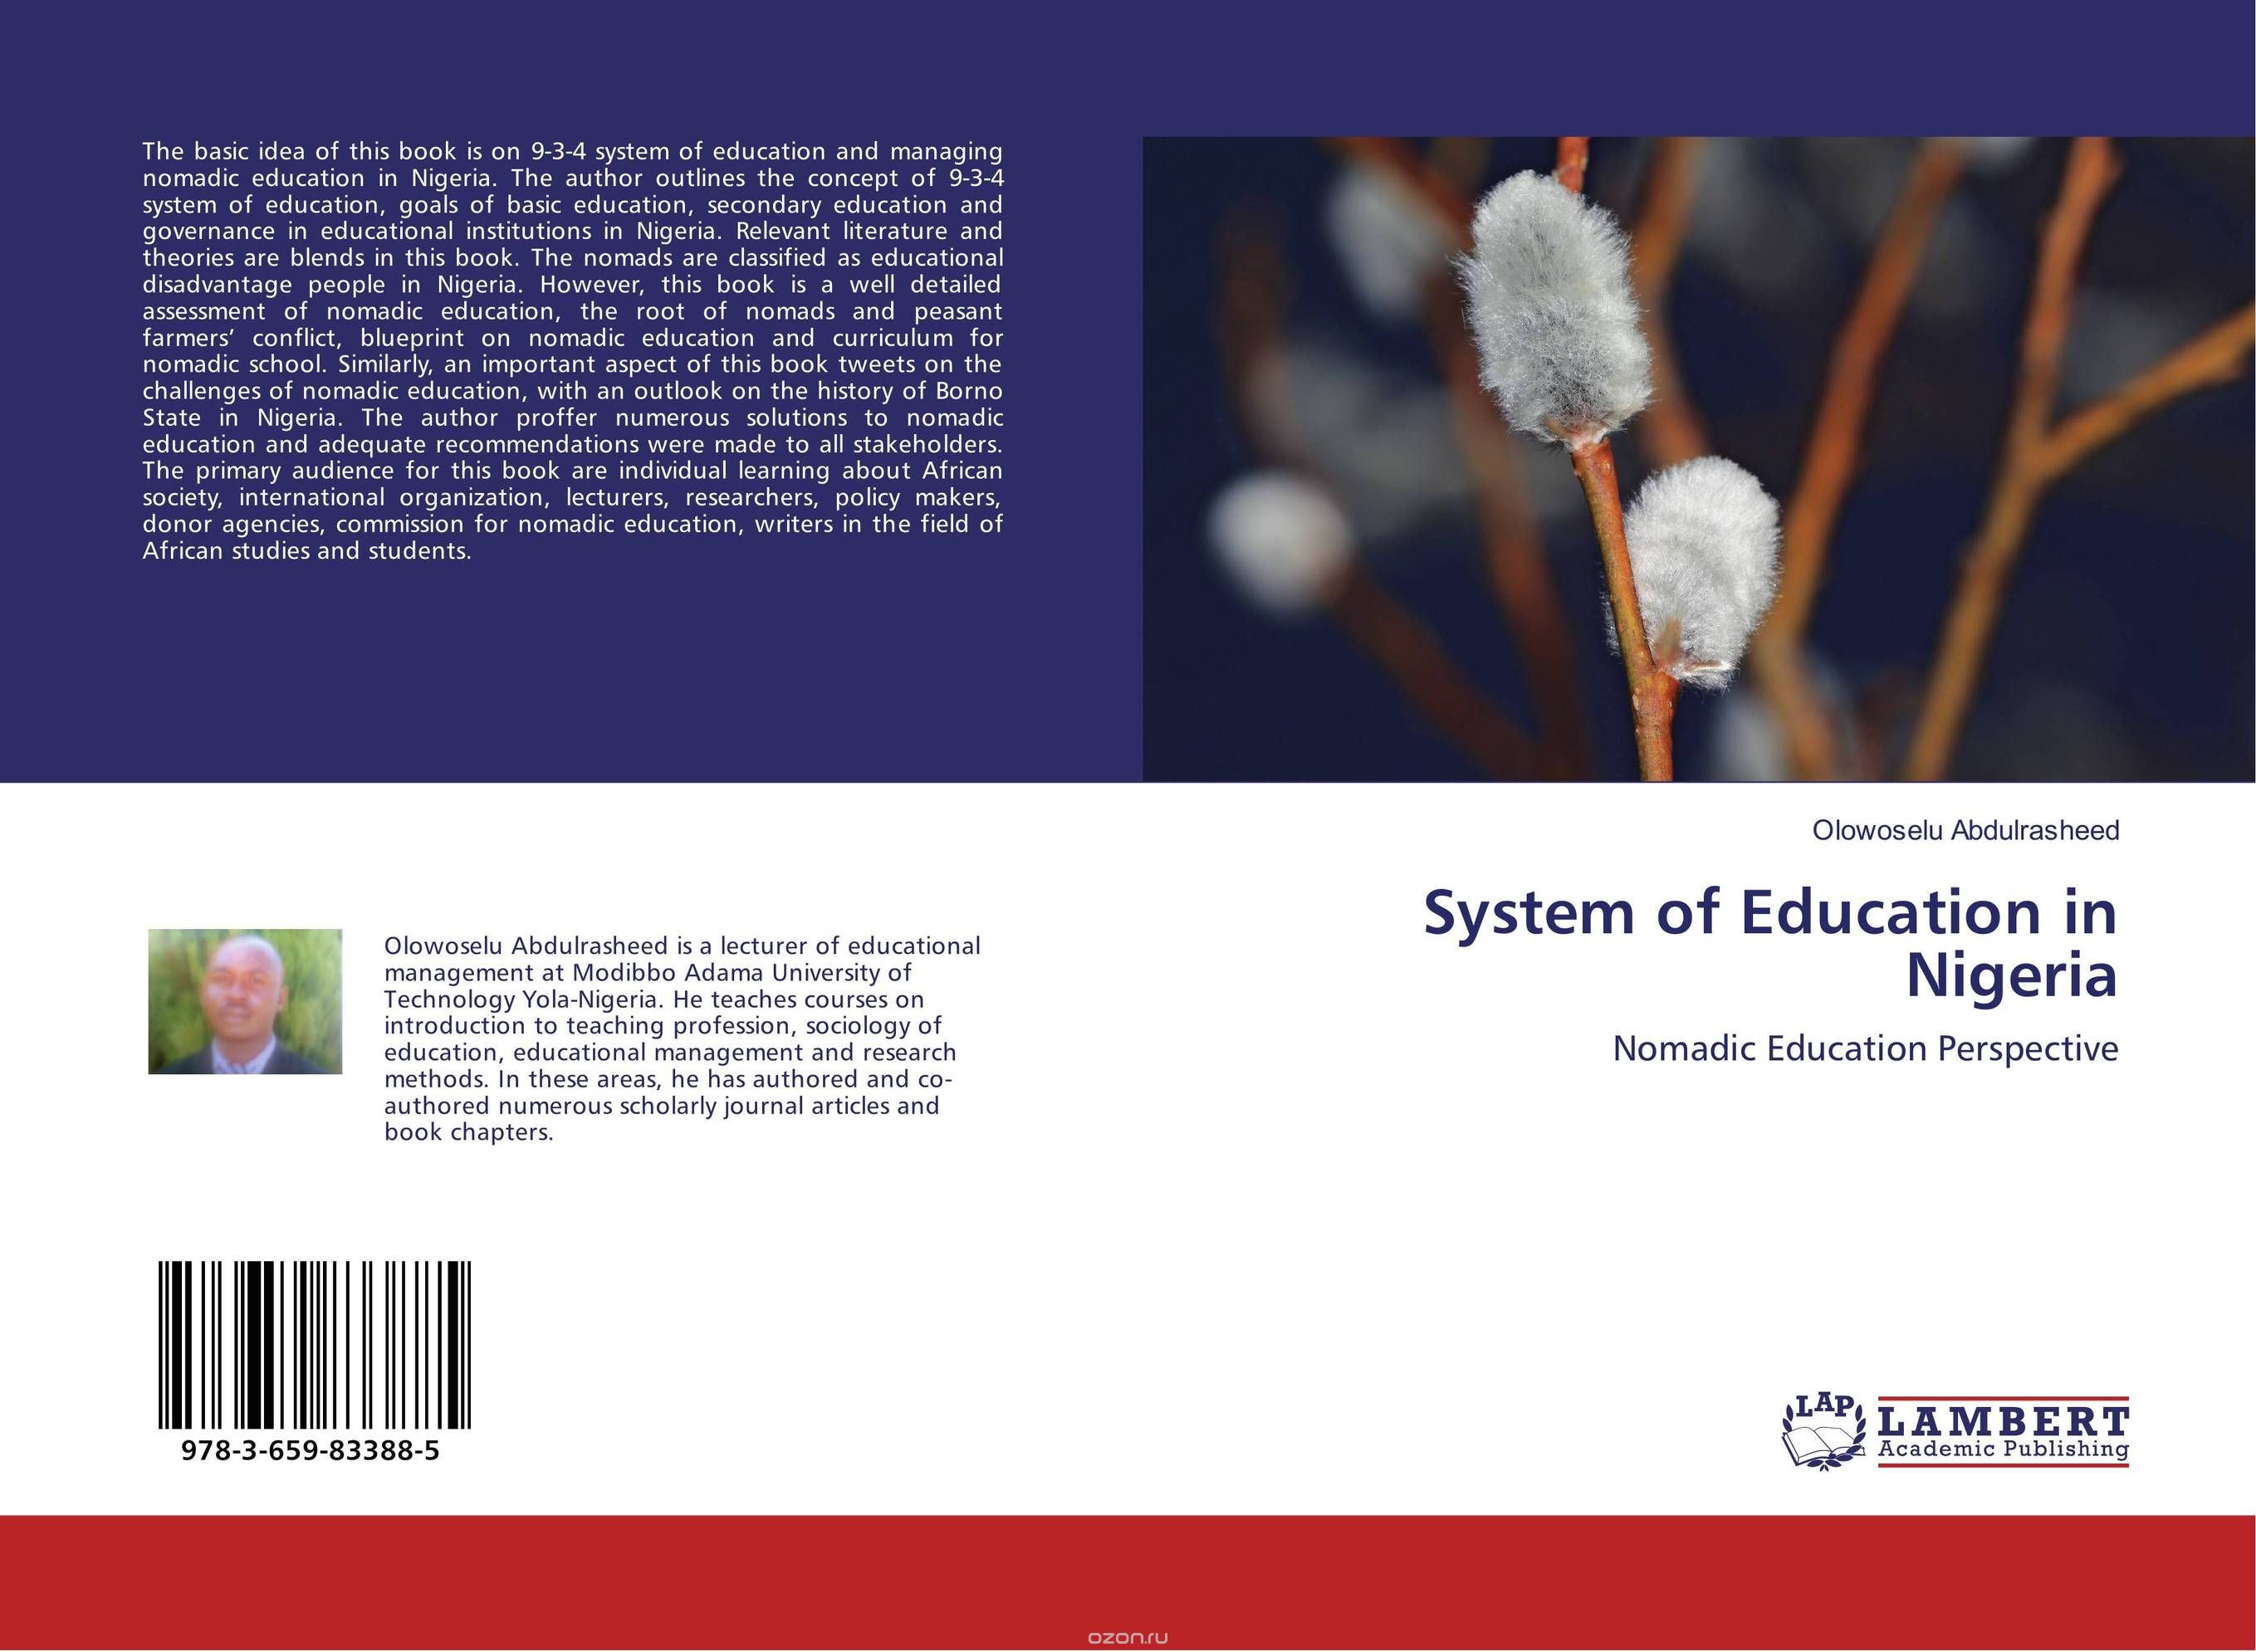 Скачать книгу "System of Education in Nigeria"